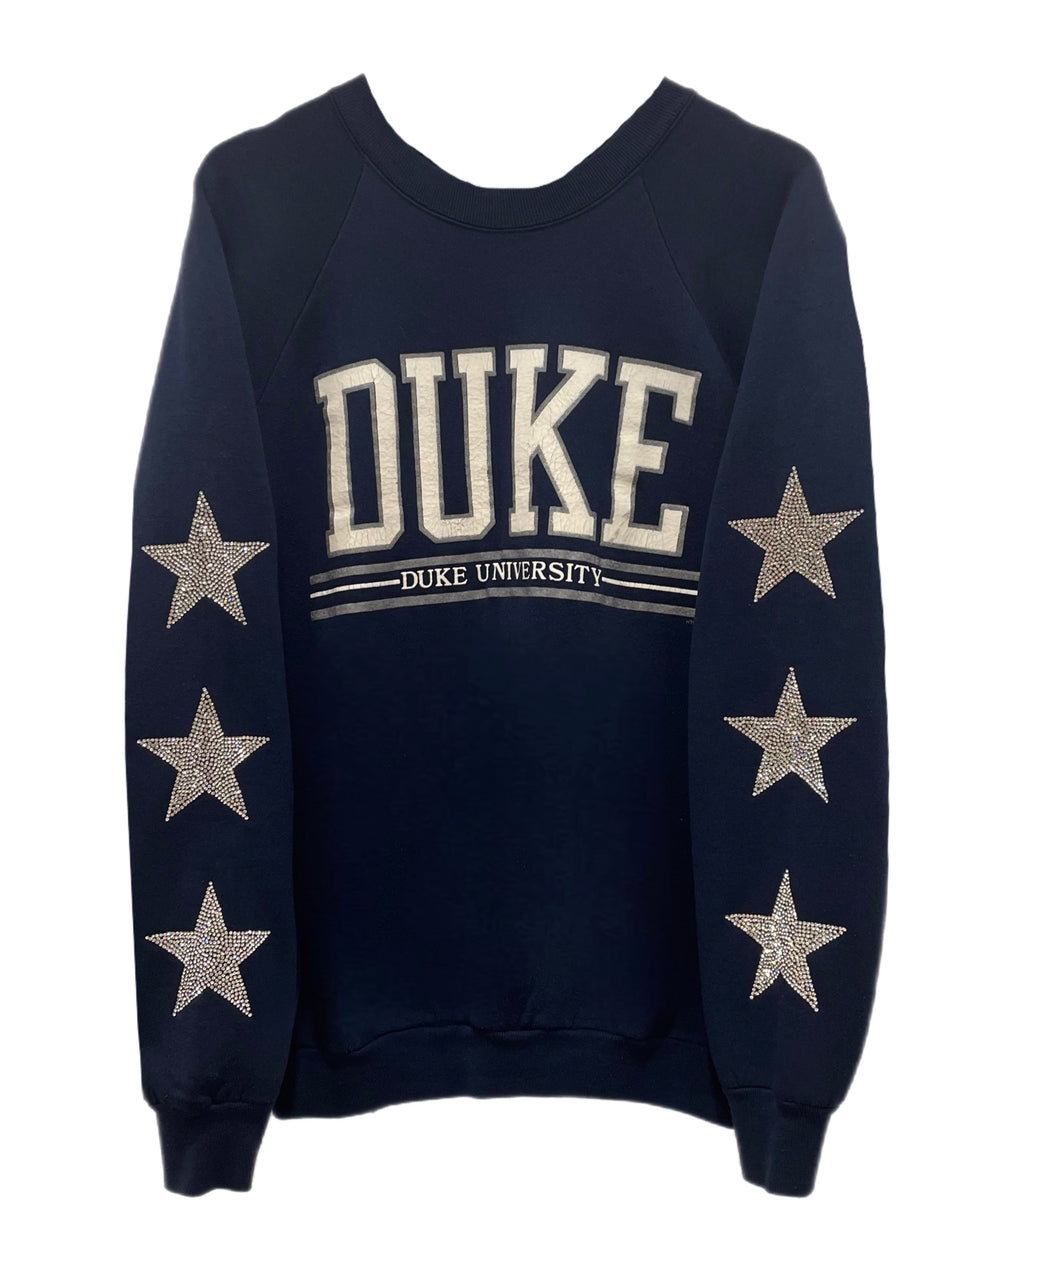 Duke Univeristy, One of a KIND Vintage Sweatshirt with Three Crystal Star Design